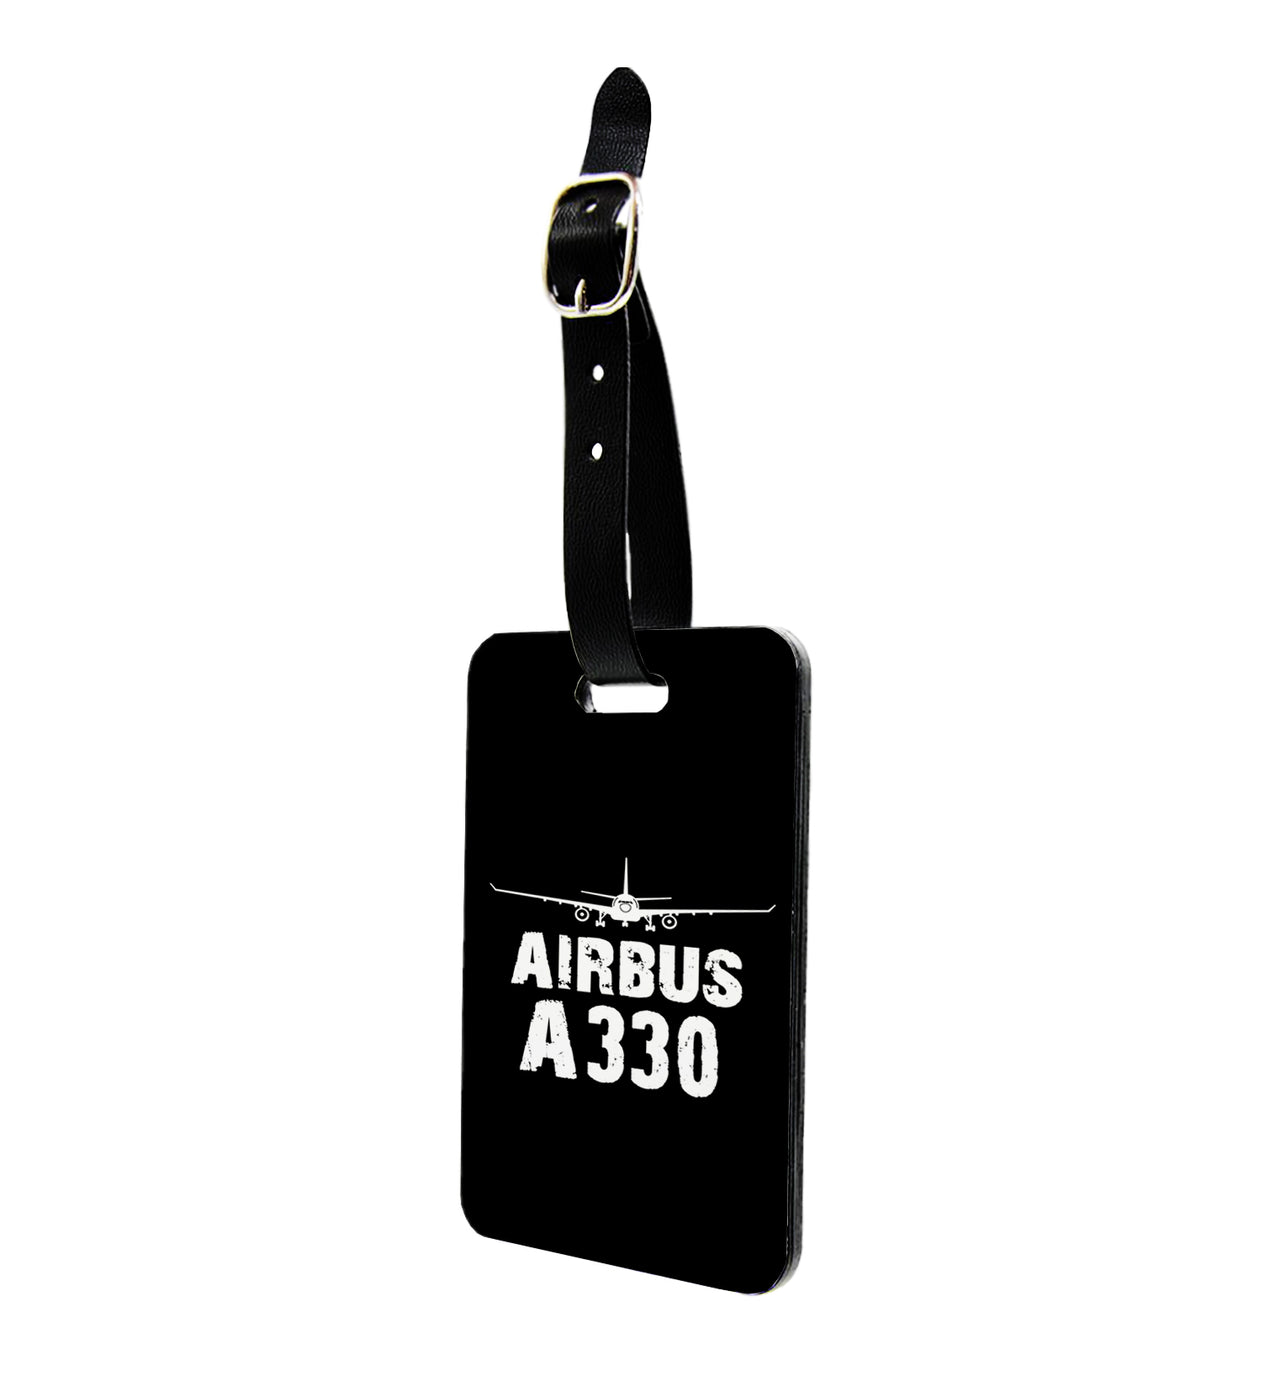 Airbus A330 & Plane Designed Luggage Tag